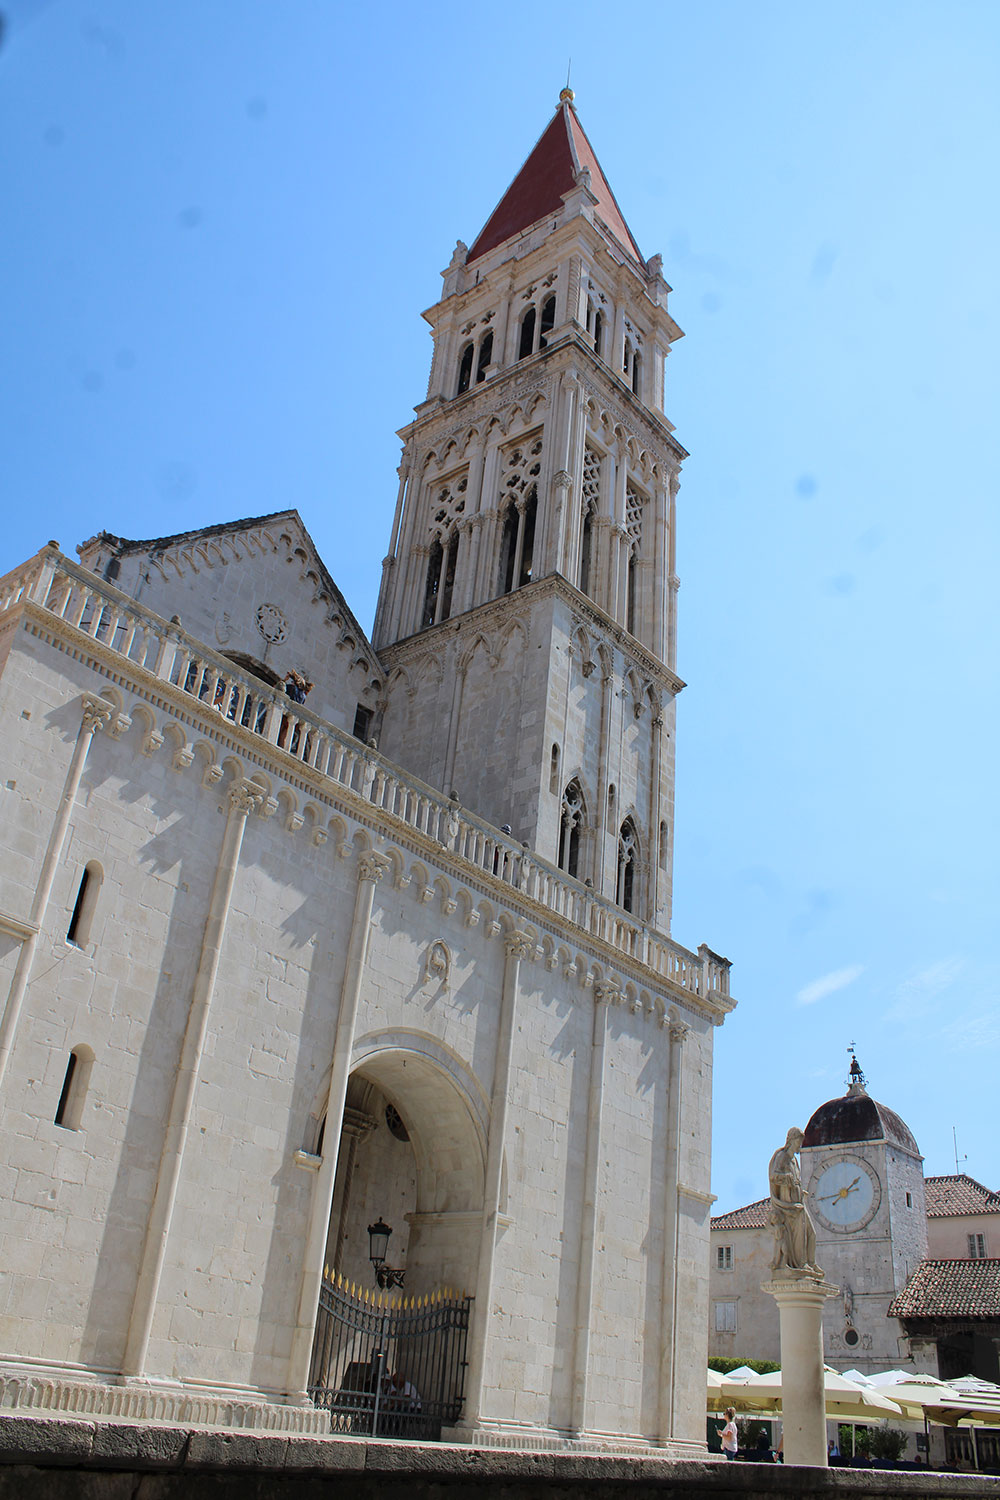 Day Trips from Split: Trogir